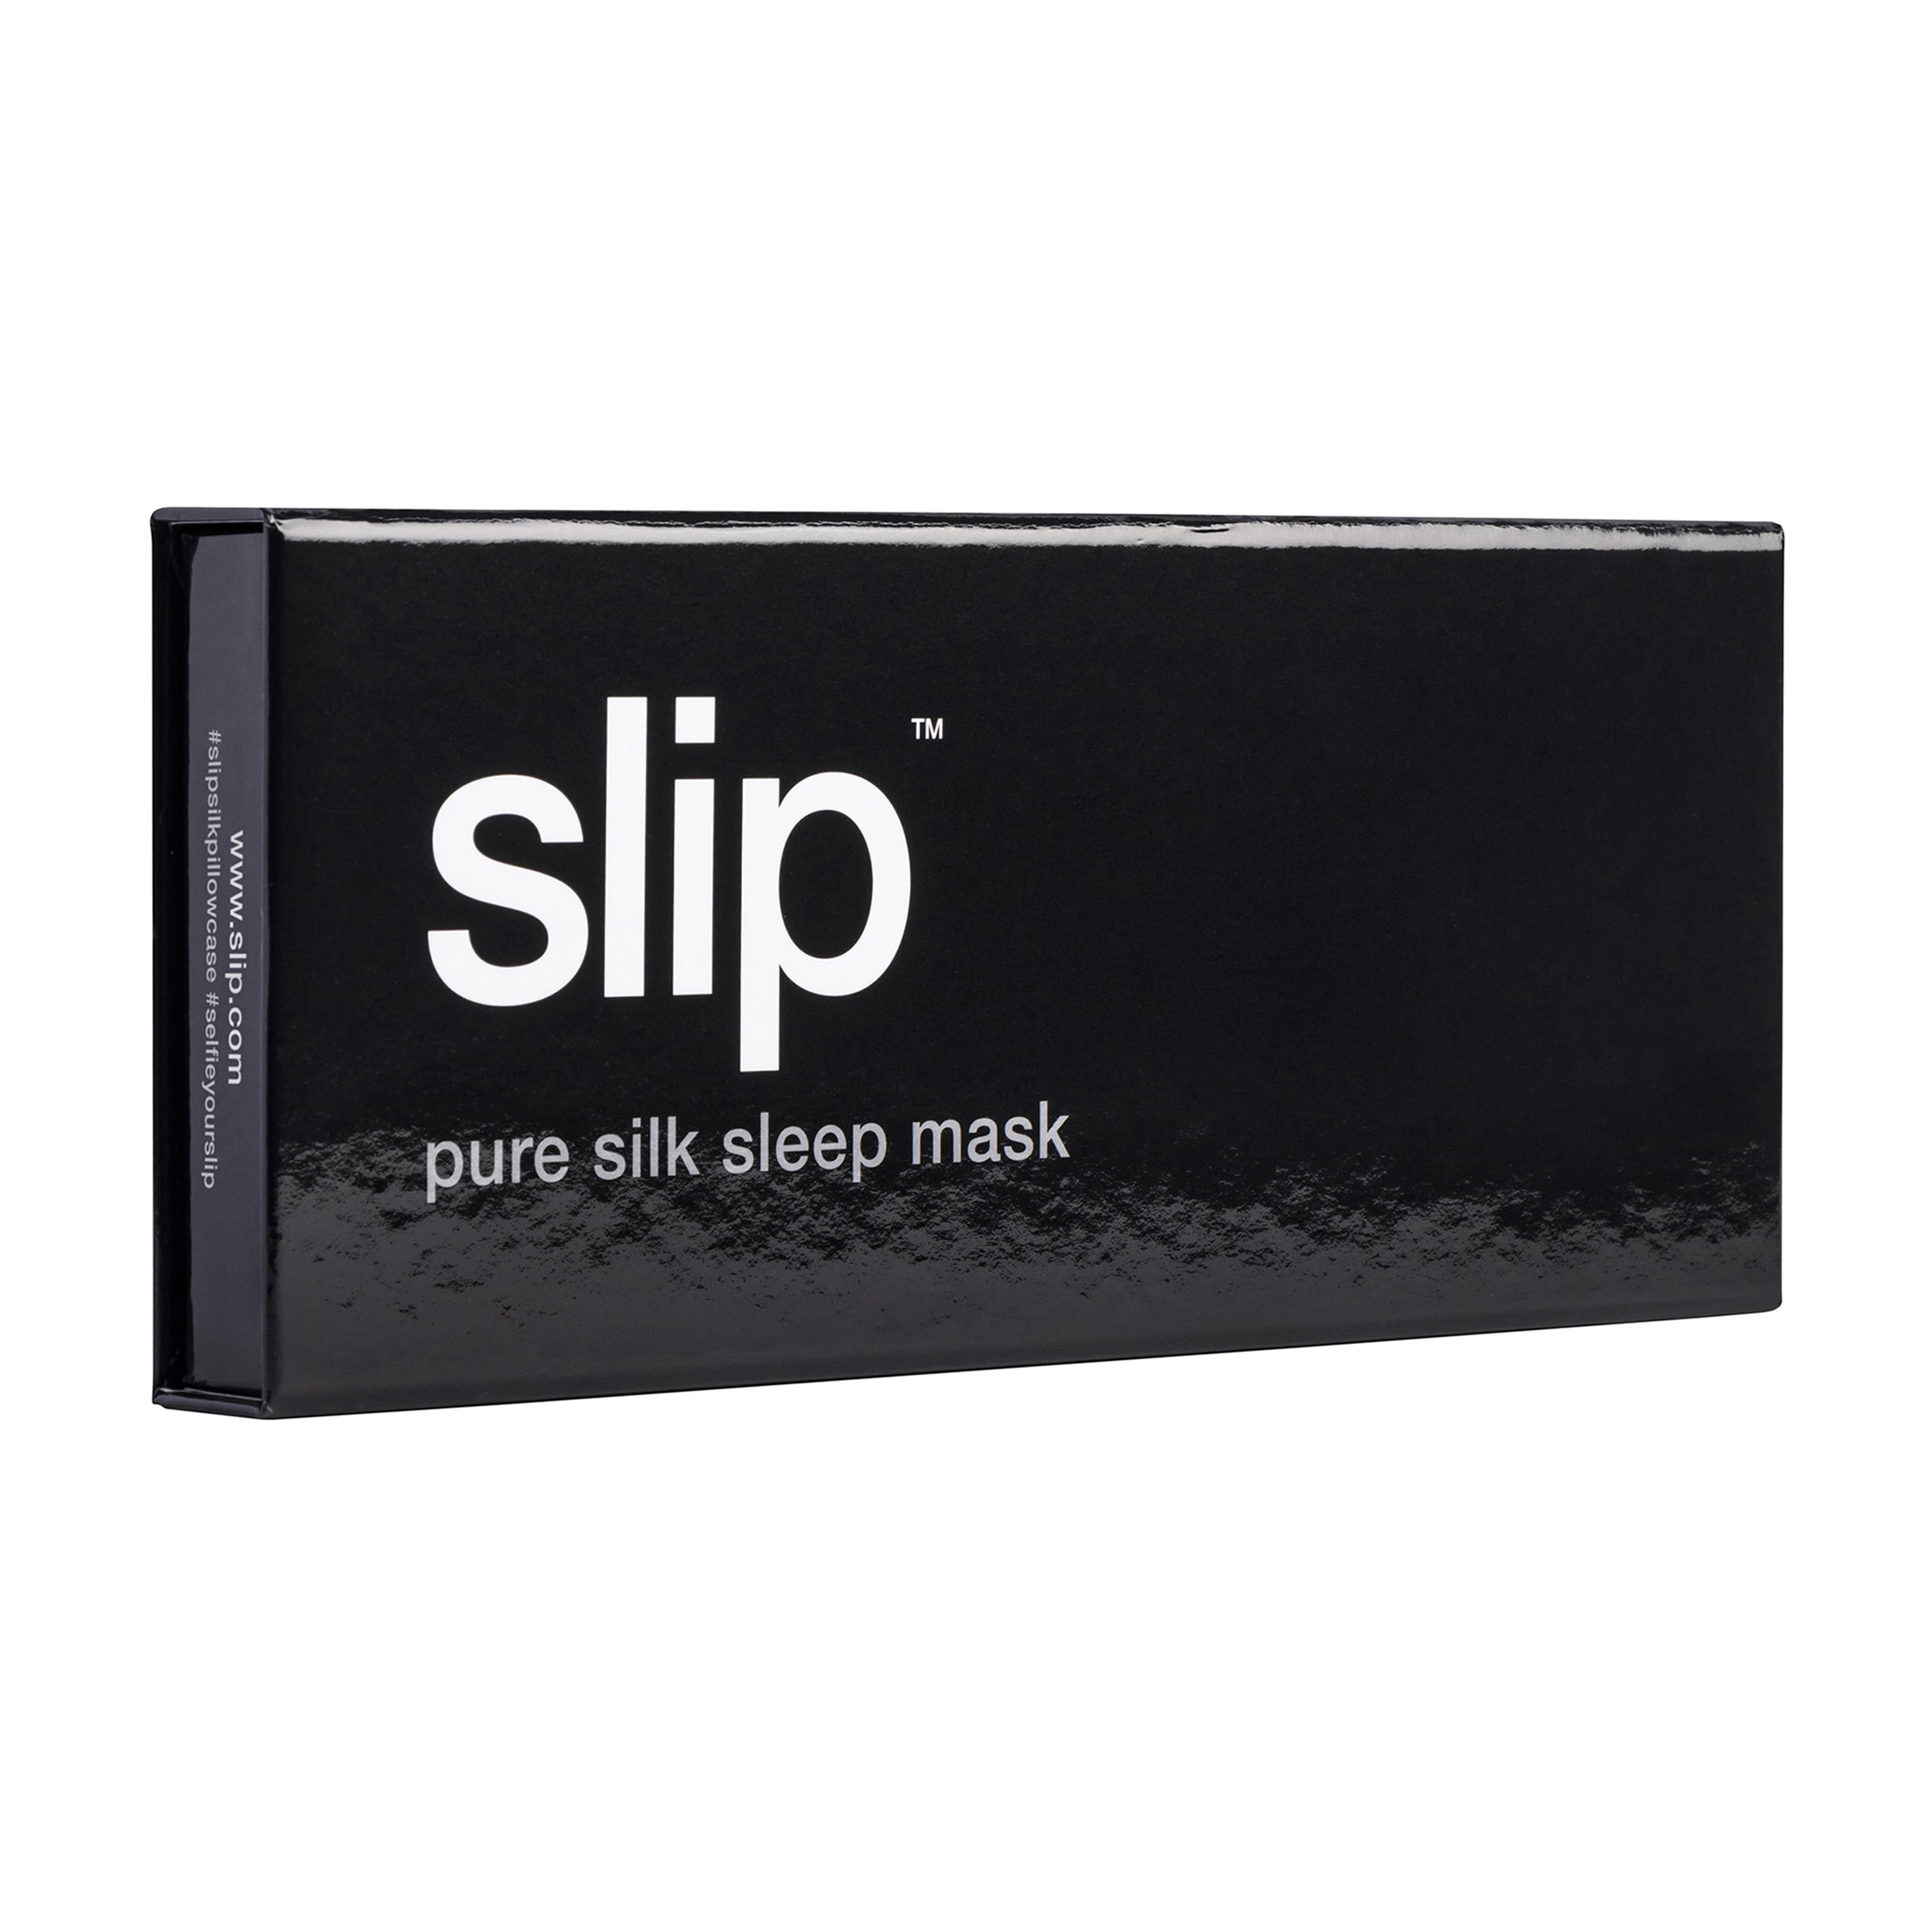 Slip Pure Silk Sleep Mask with Elastic Band, Reduce Stretching, Navy 